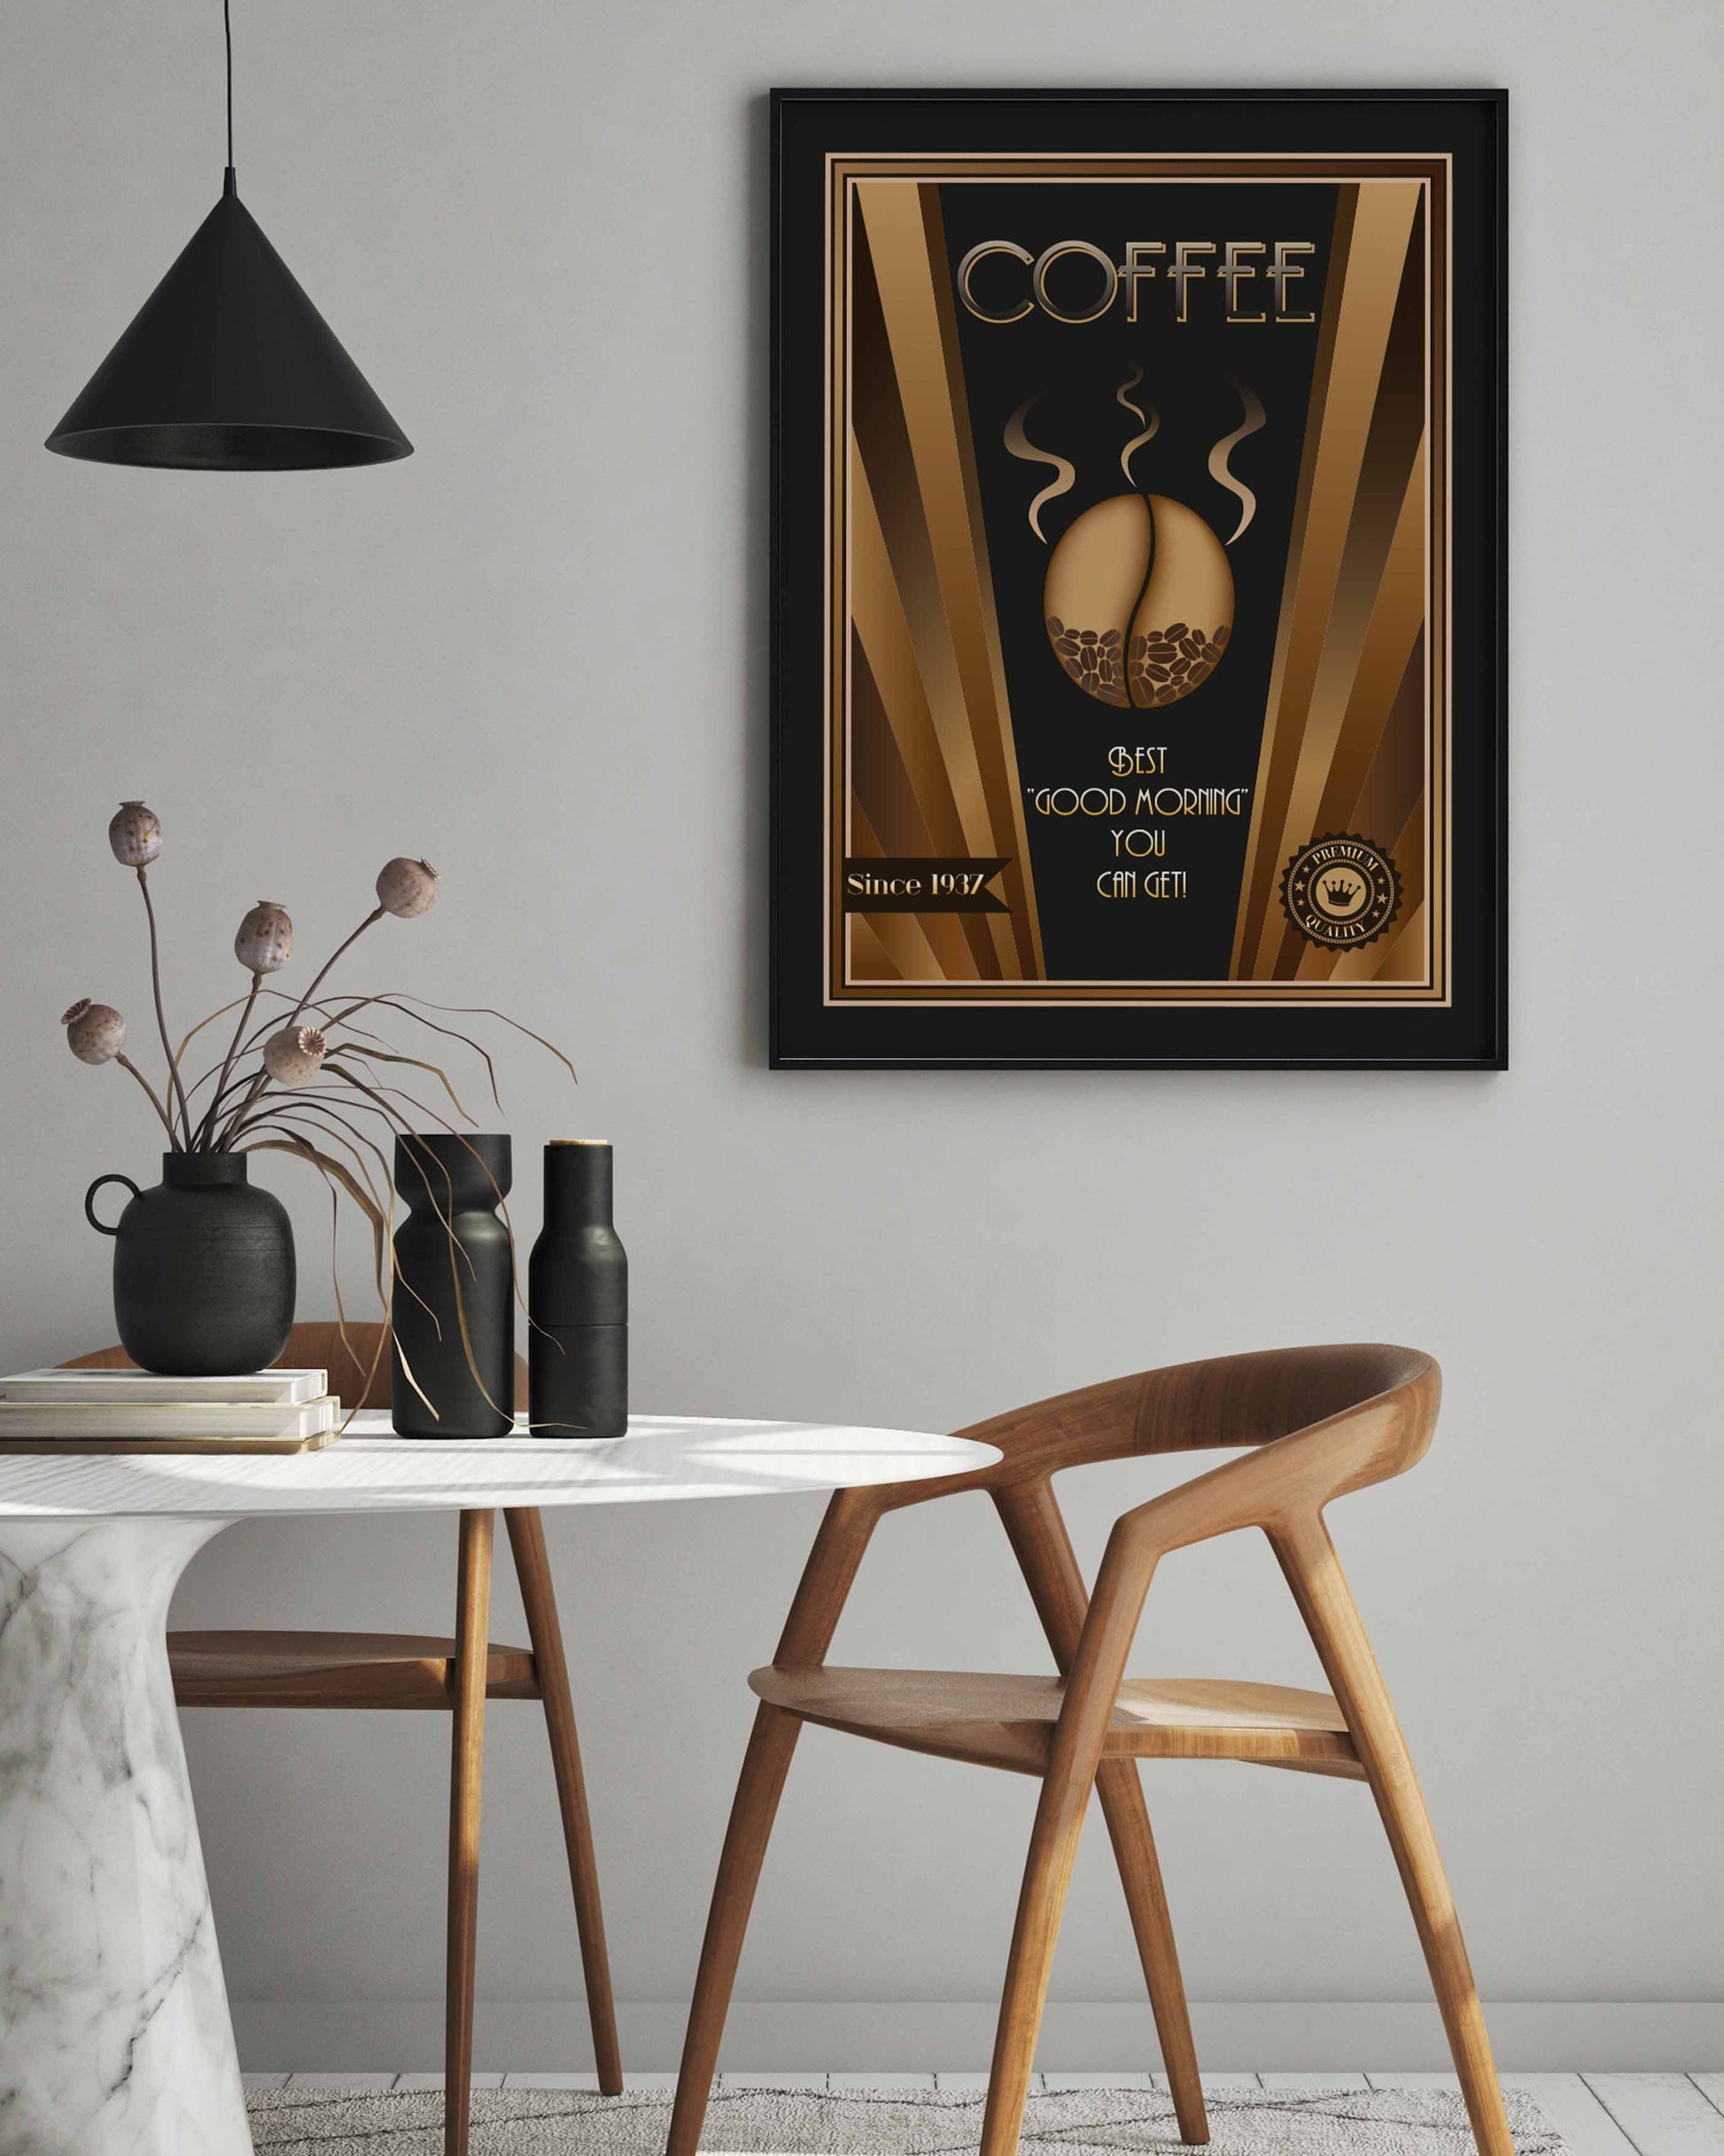 Coffee wall art print in an art deco style